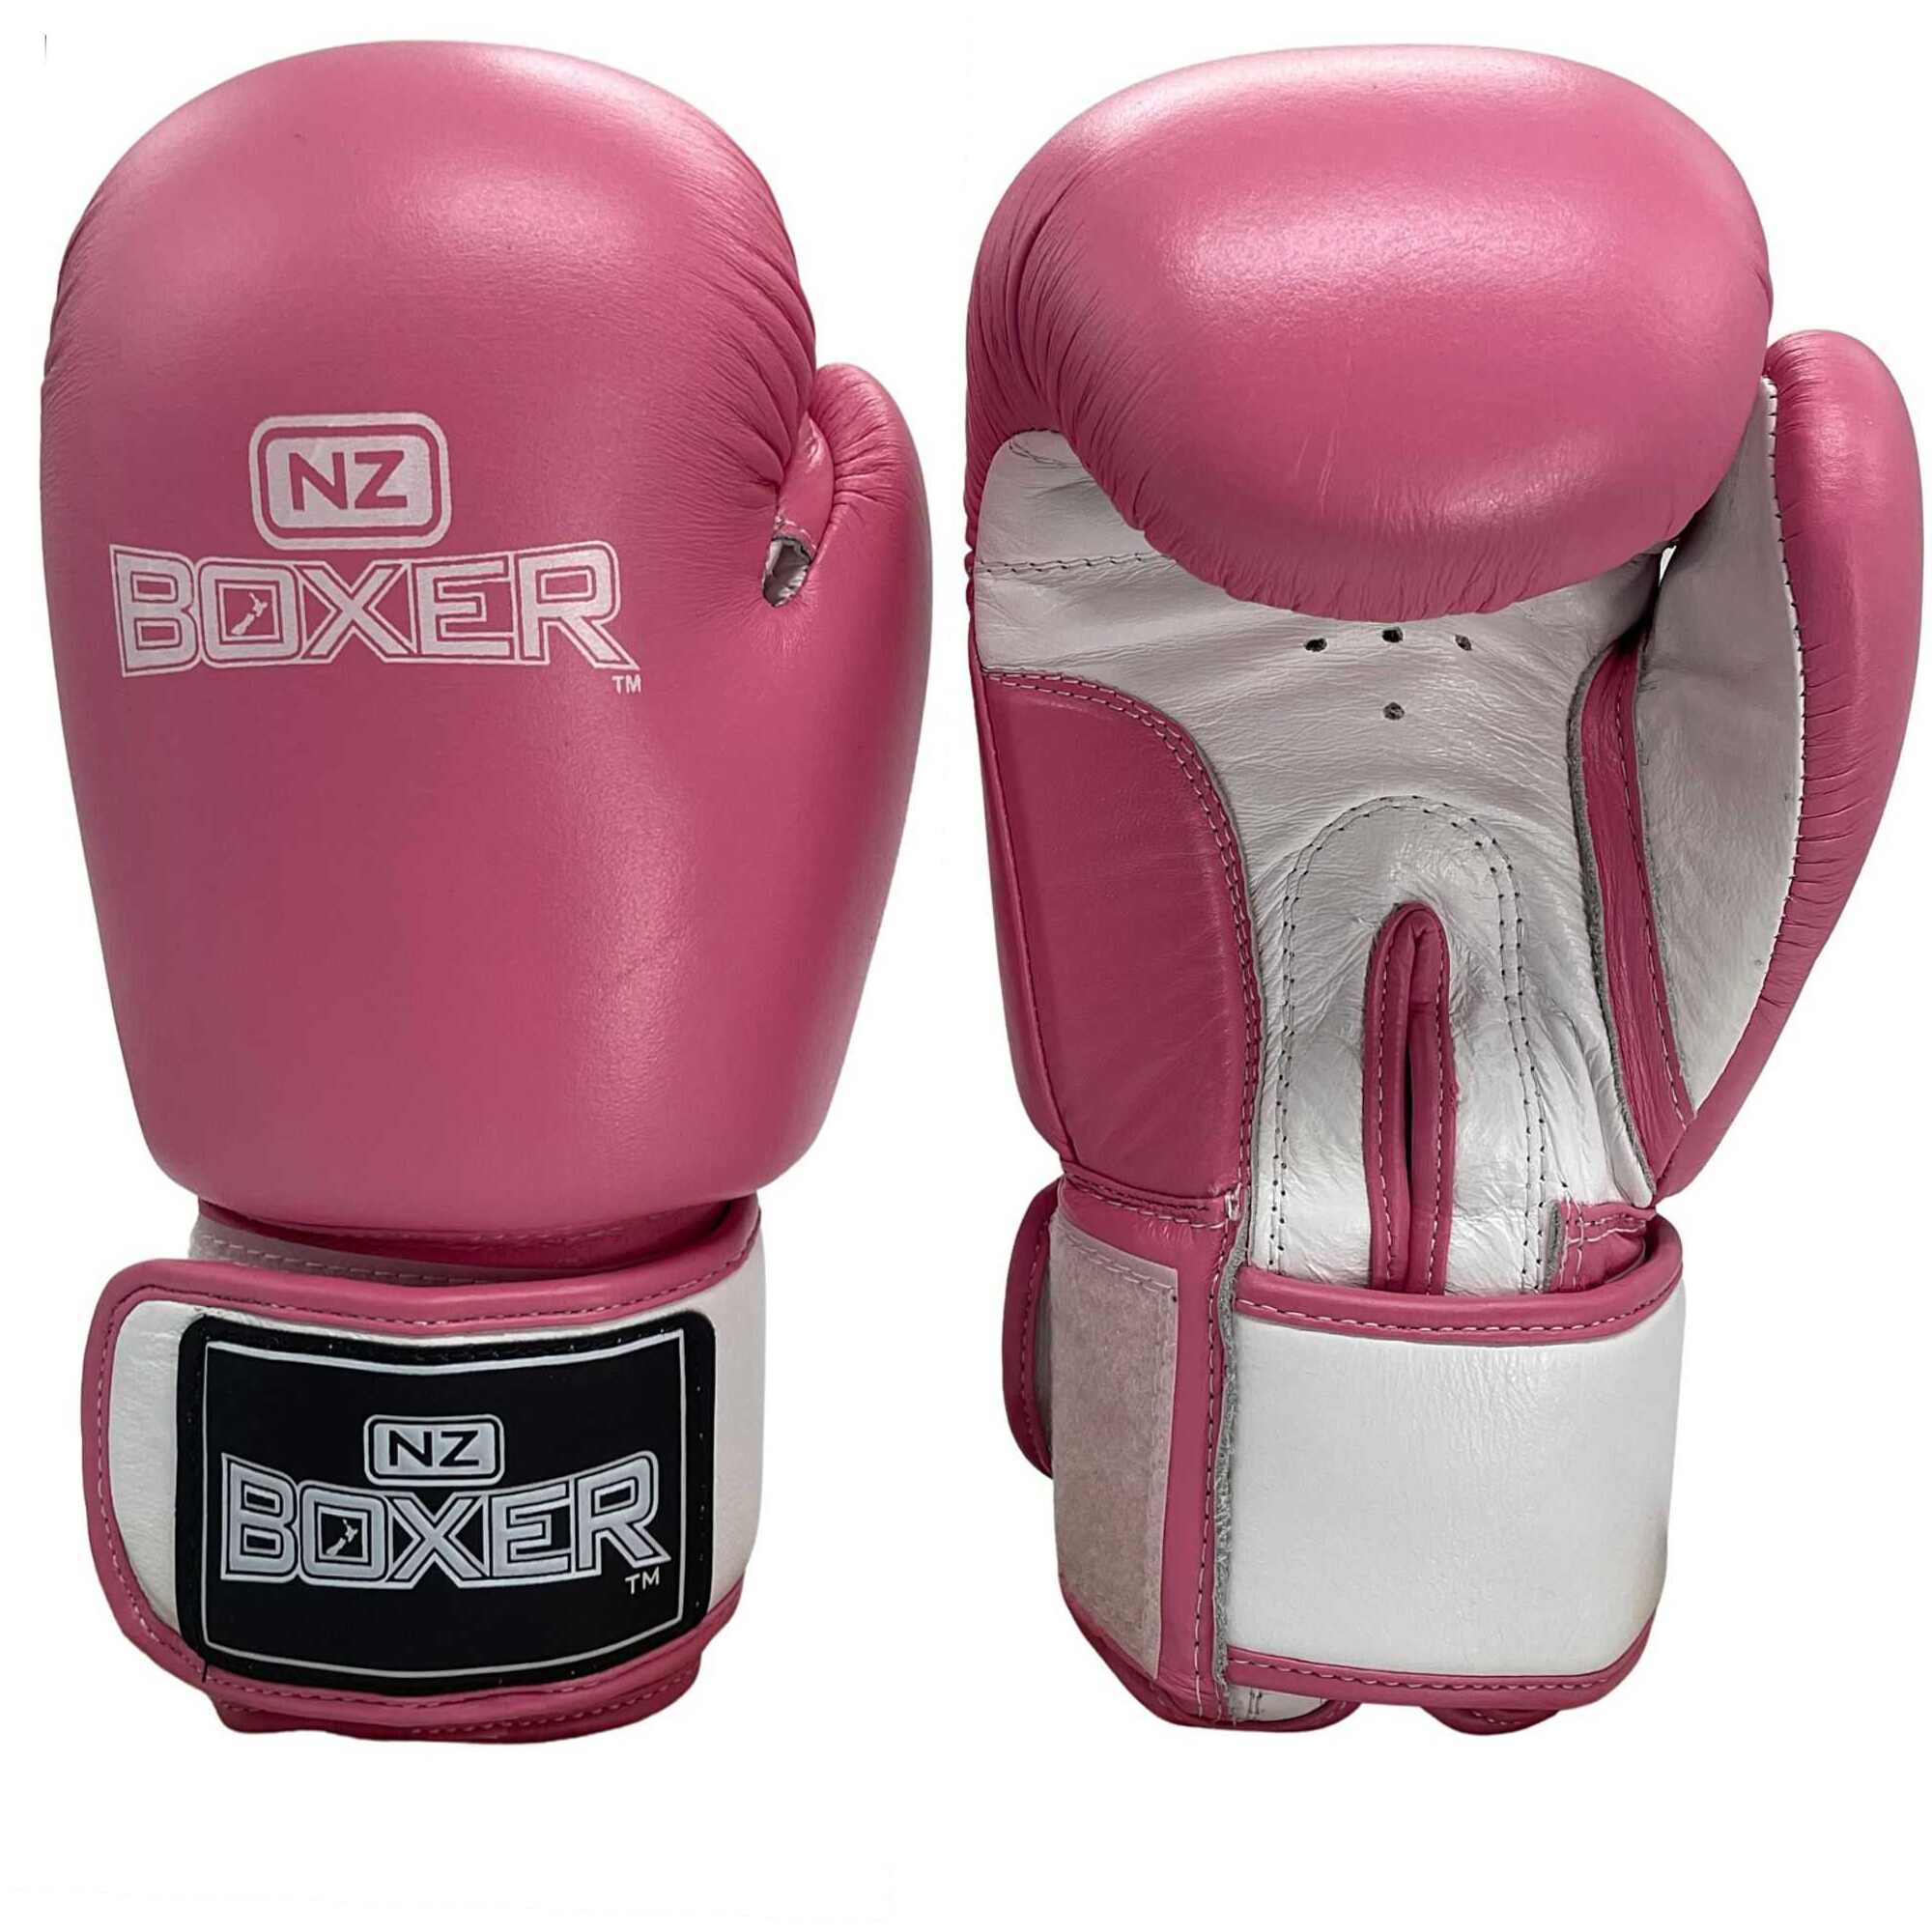 NZ Boxer Classic Boxing Glove